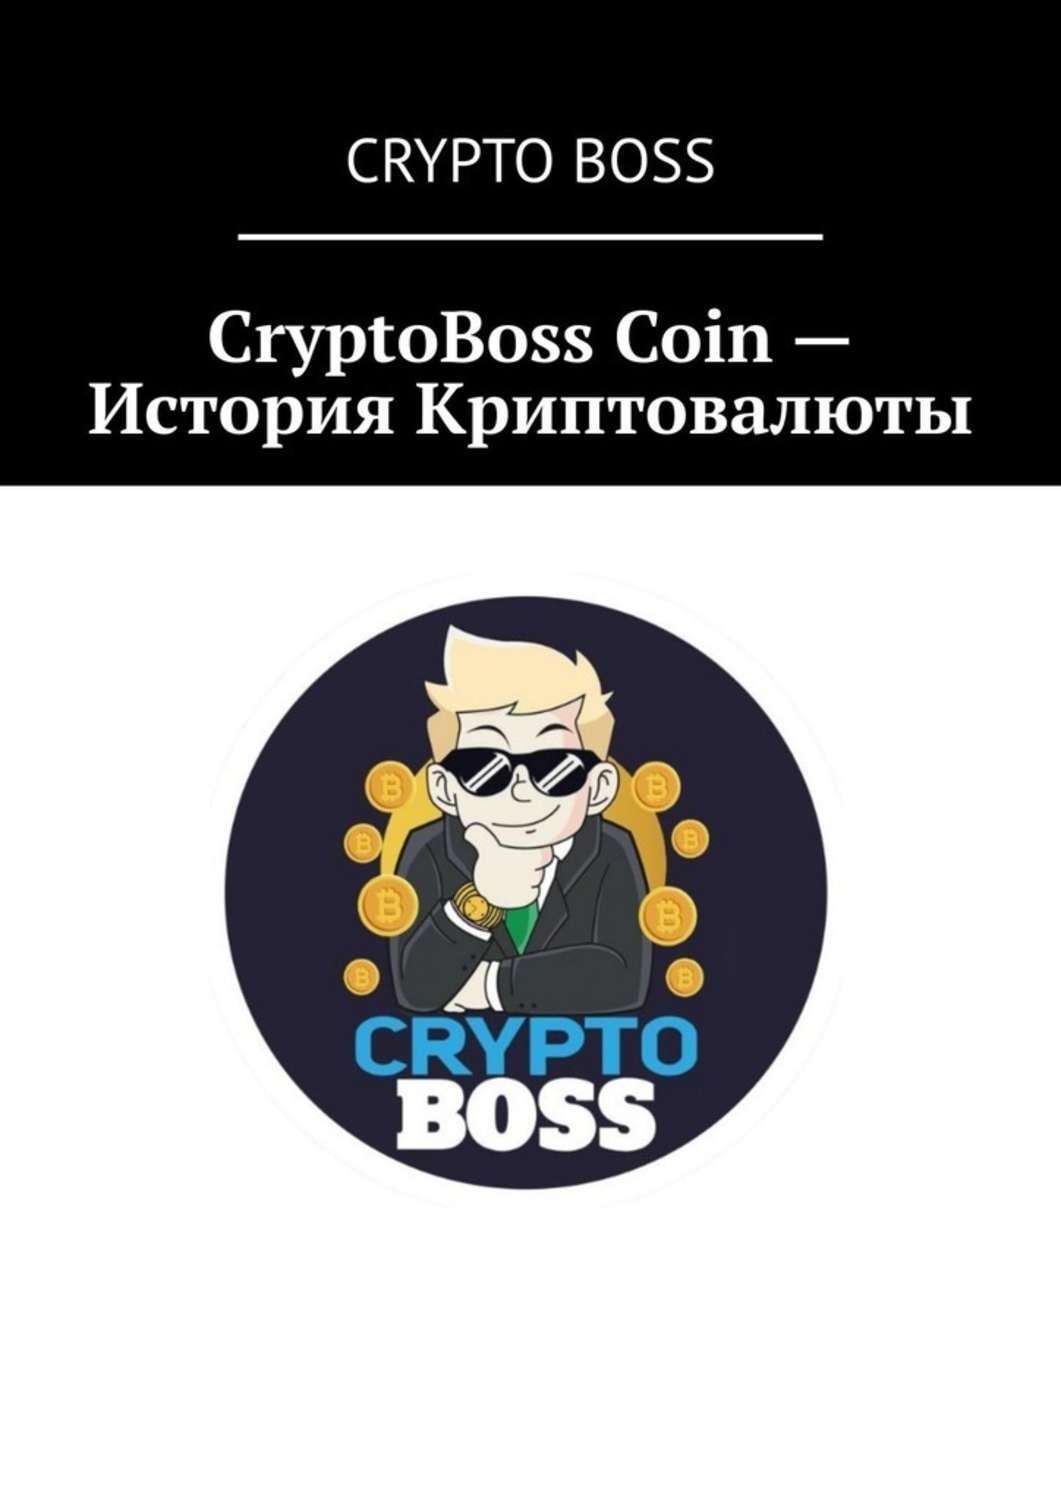 Crypto boss casino crypto boss casino fun. CRYPTOBOSS. Crypto Boss. Крипто книга. Фото крипто бос.